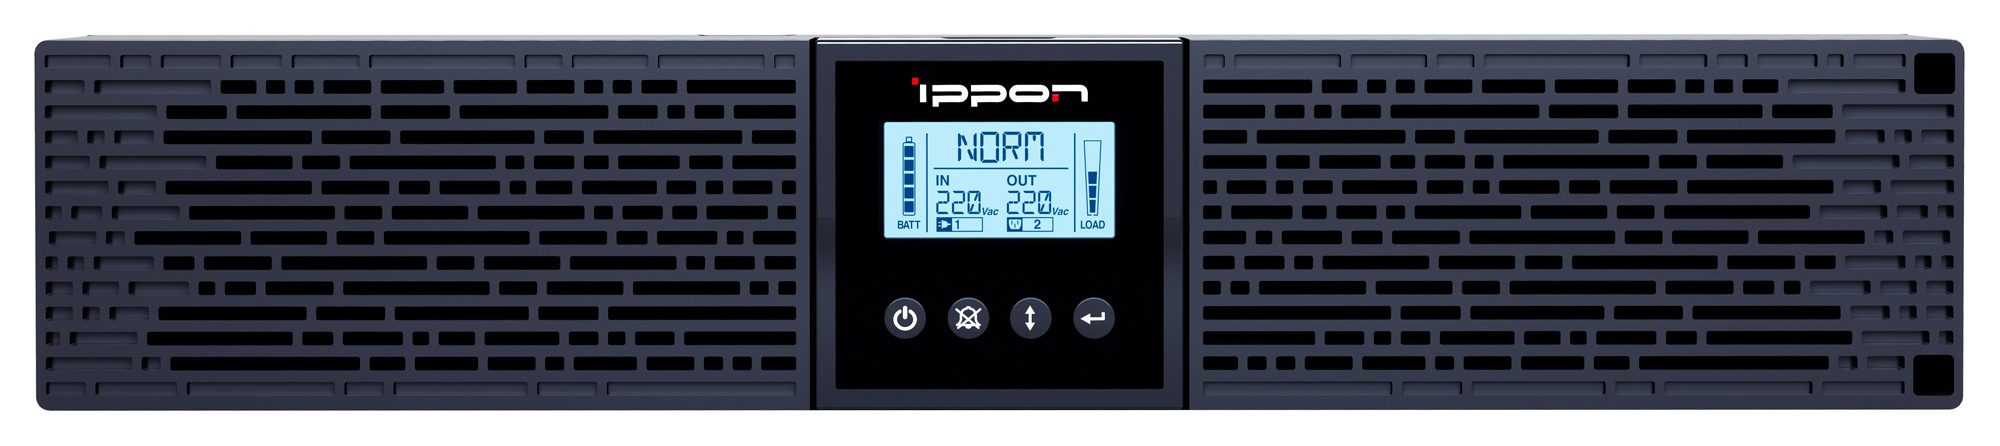 Ippon -  Линейно-интерактивный ИБП Smart Winner II Euro